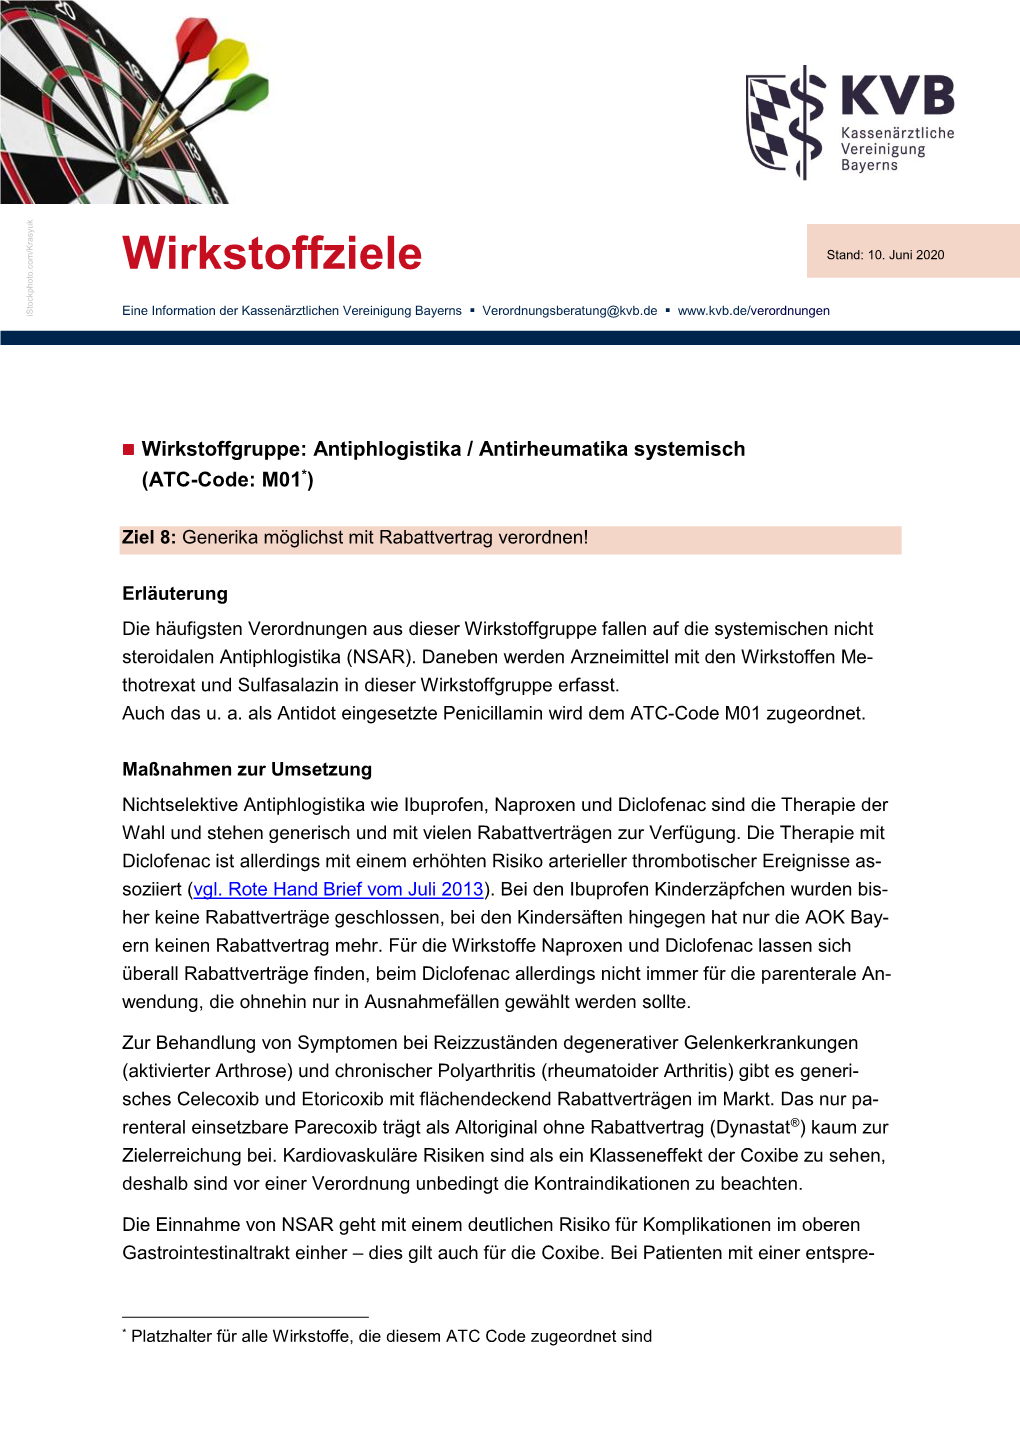 Antiphlogistika / Antirheumatika Systemisch (ATC-Code: M01*)